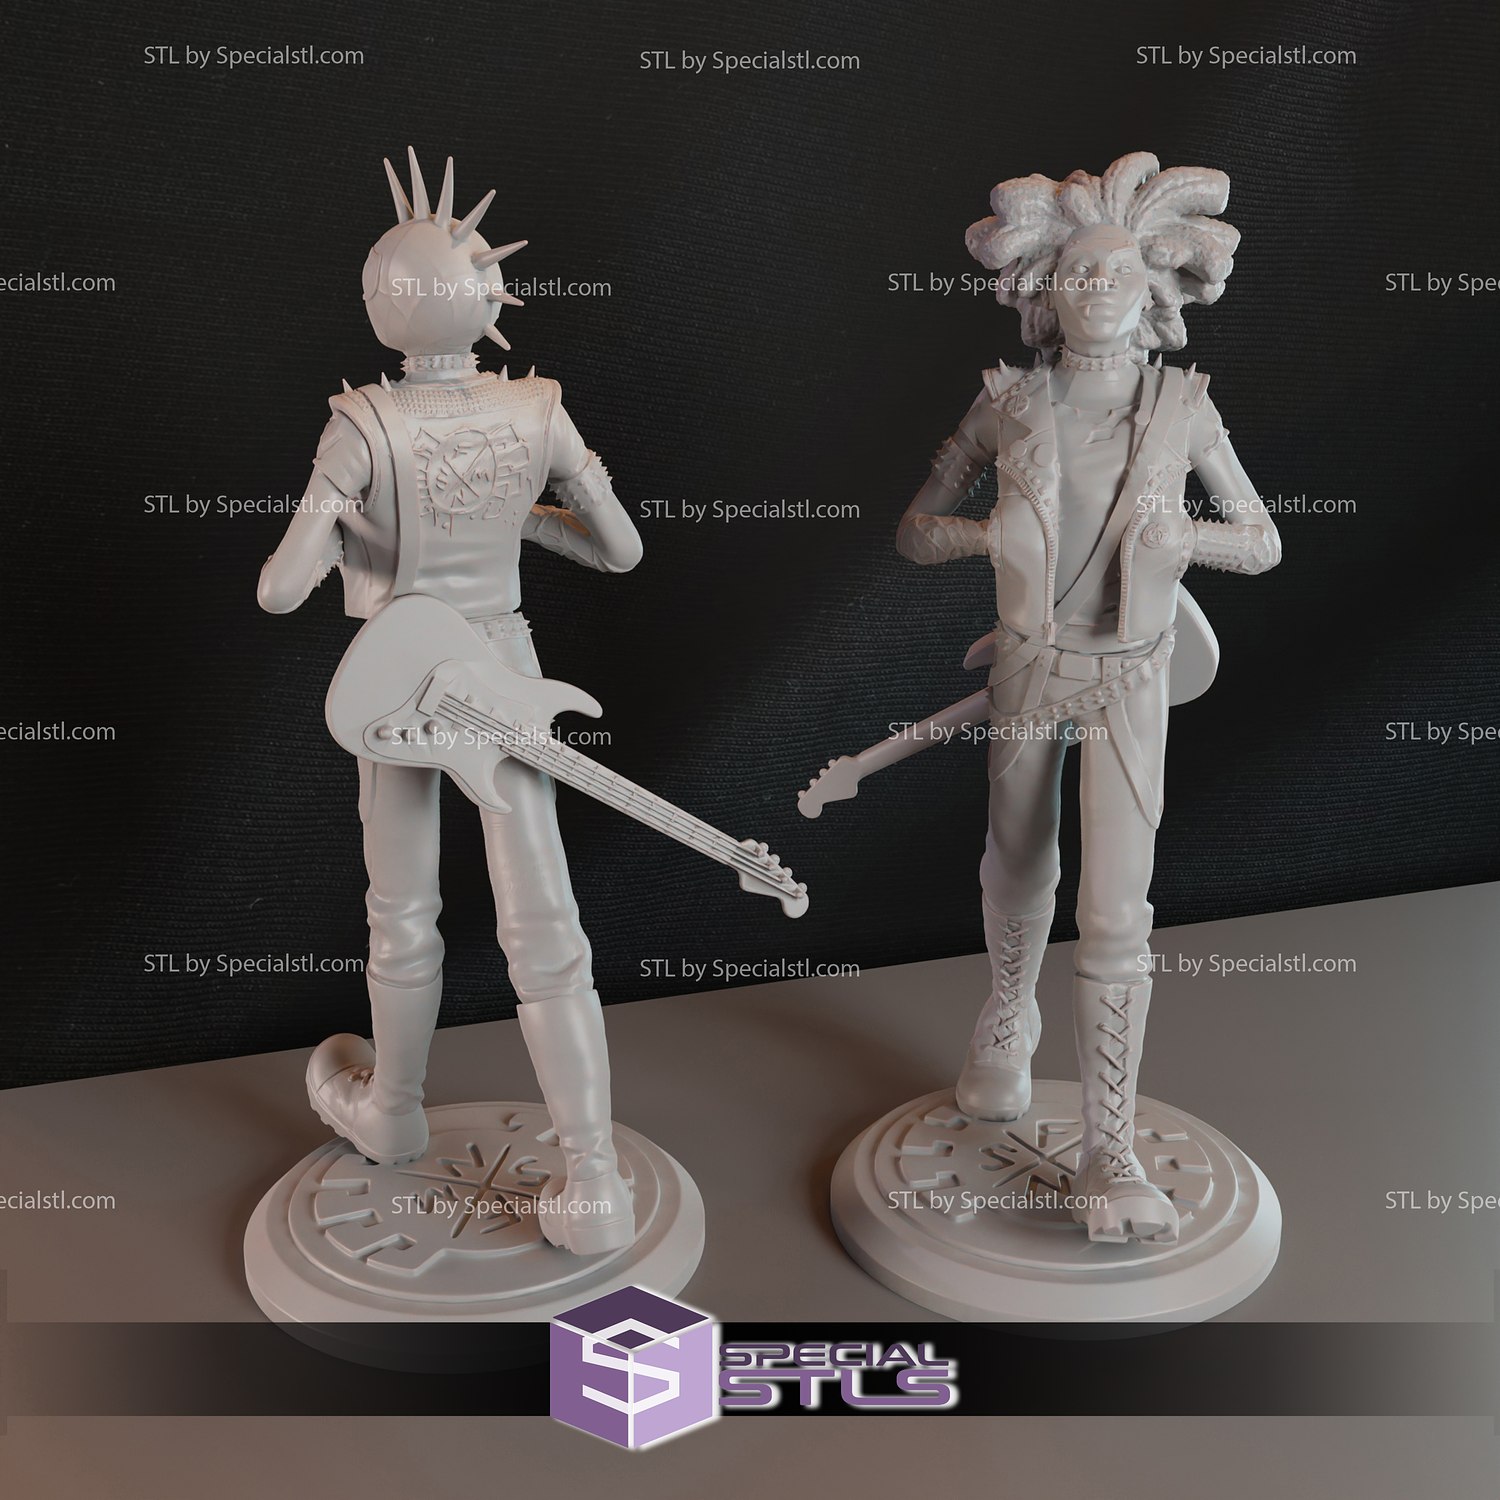 Spider-Punk Standing 3D Printing Model STL Files